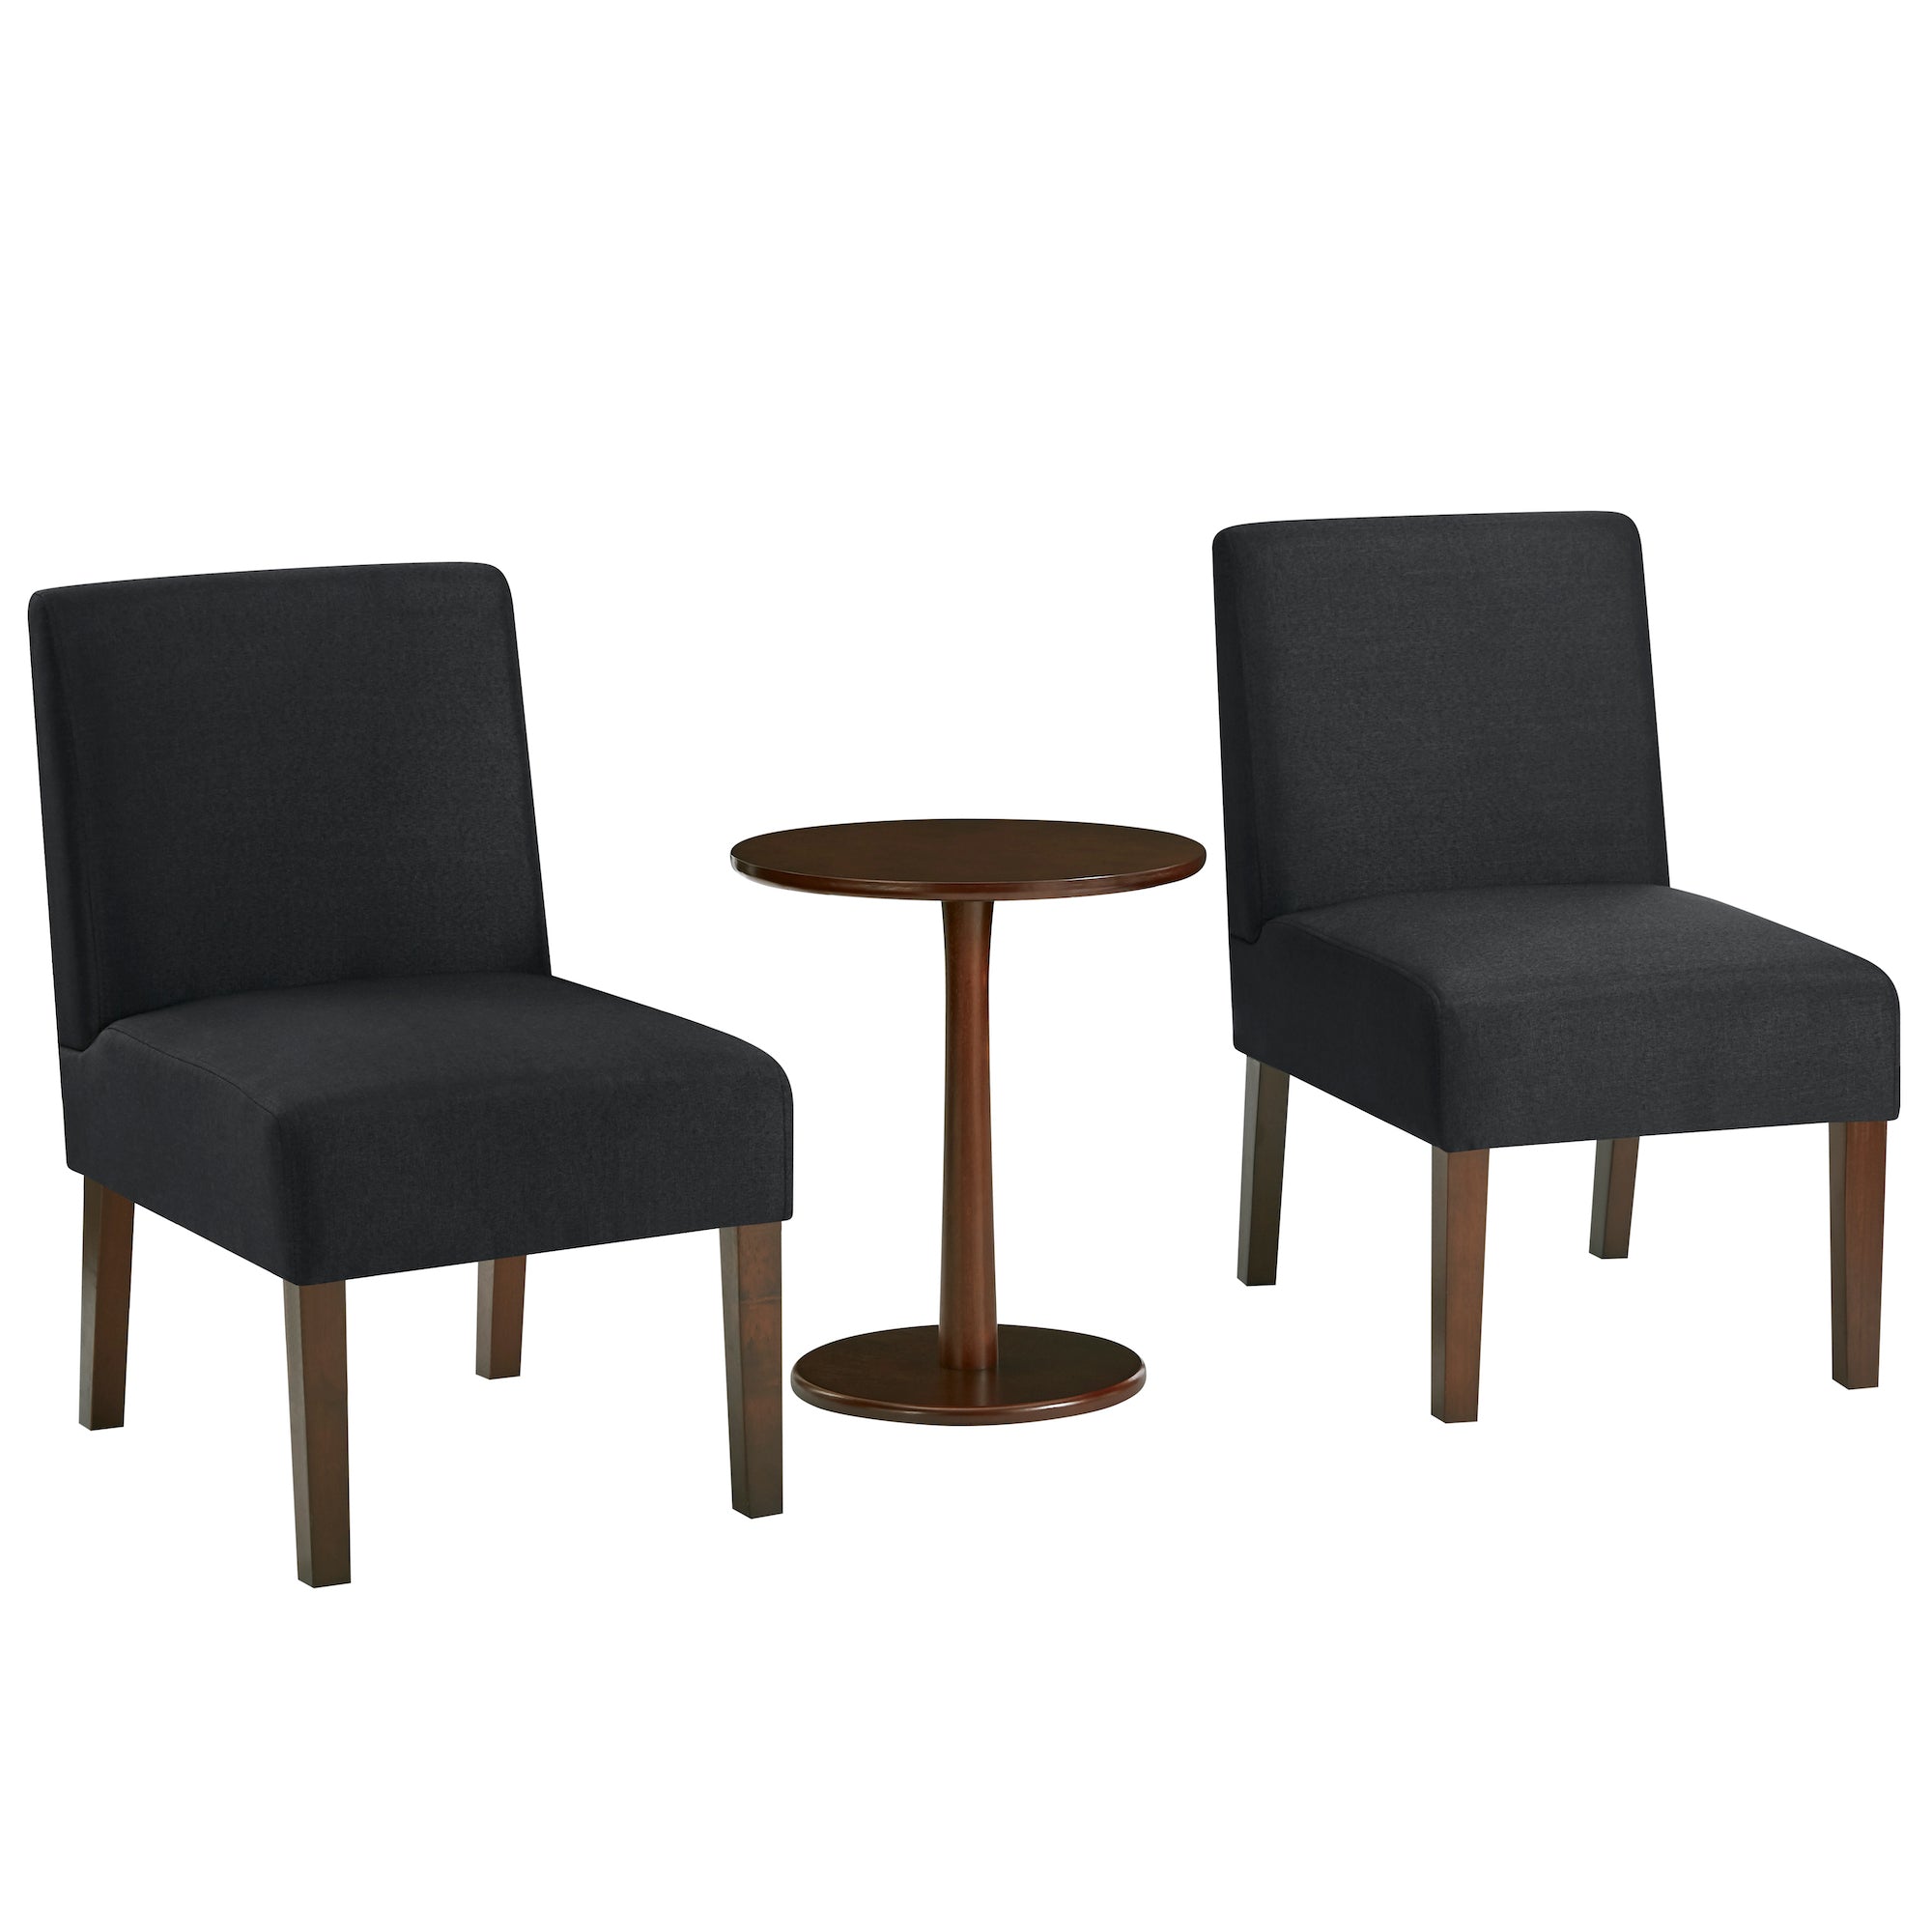 Plus Chairs & Side Table Set - Black Bravich LTD.